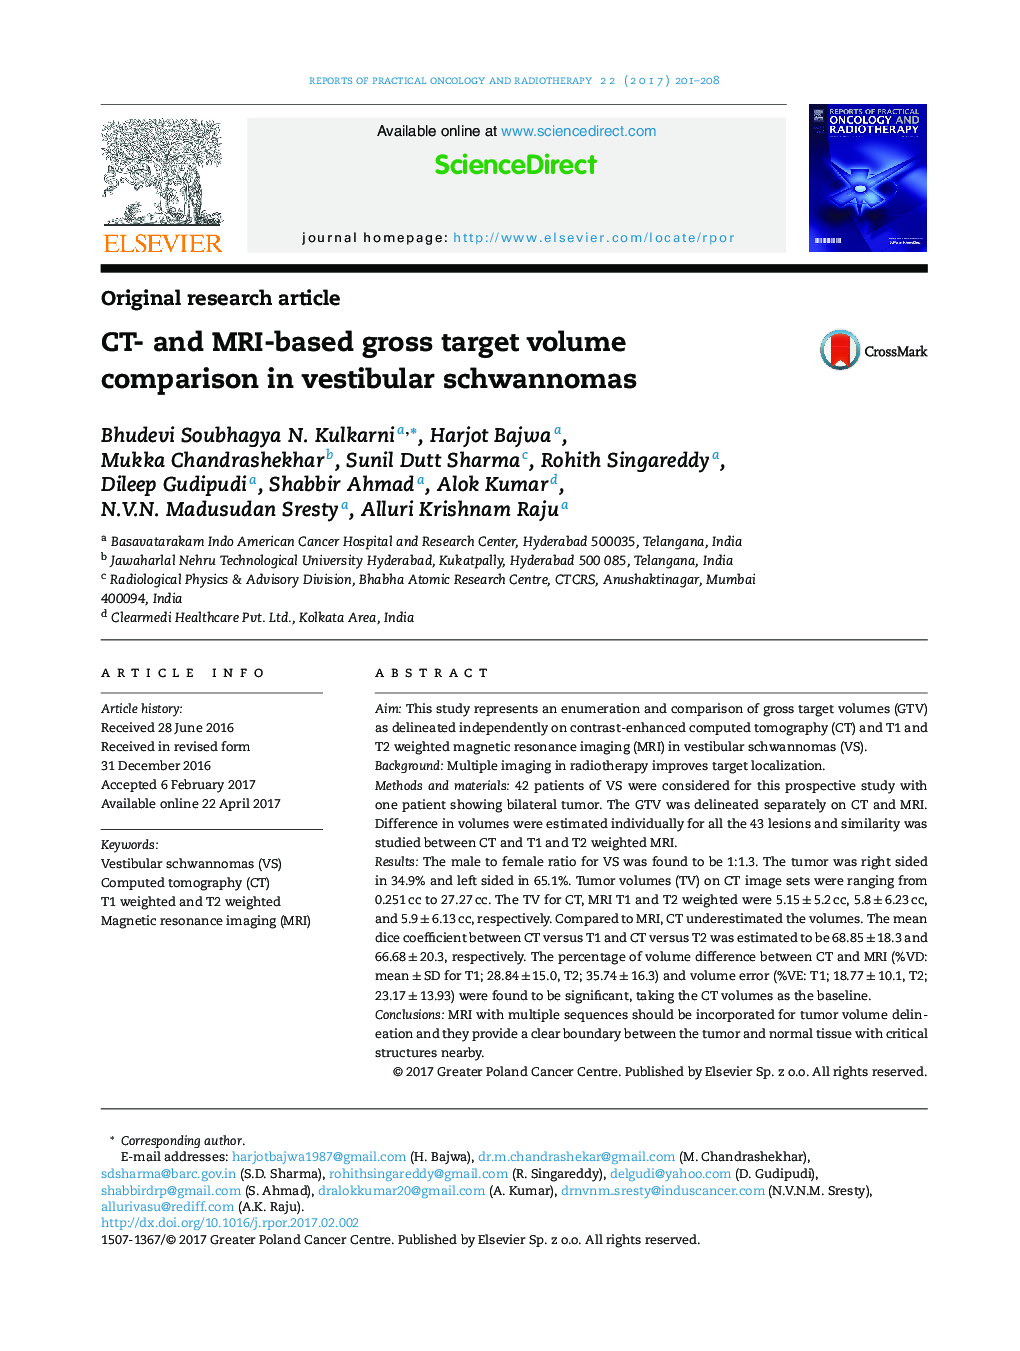 CT- and MRI-based gross target volume comparison in vestibular schwannomas